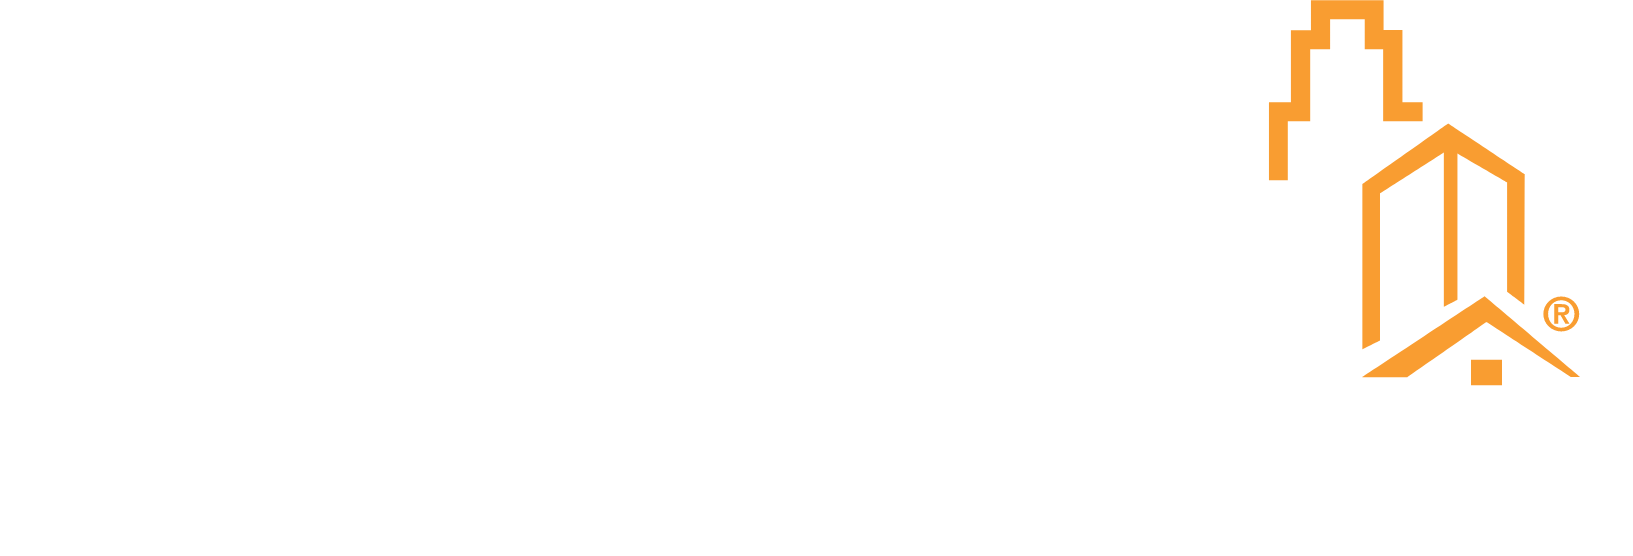 TriState Capital Holdings
 logo large for dark backgrounds (transparent PNG)